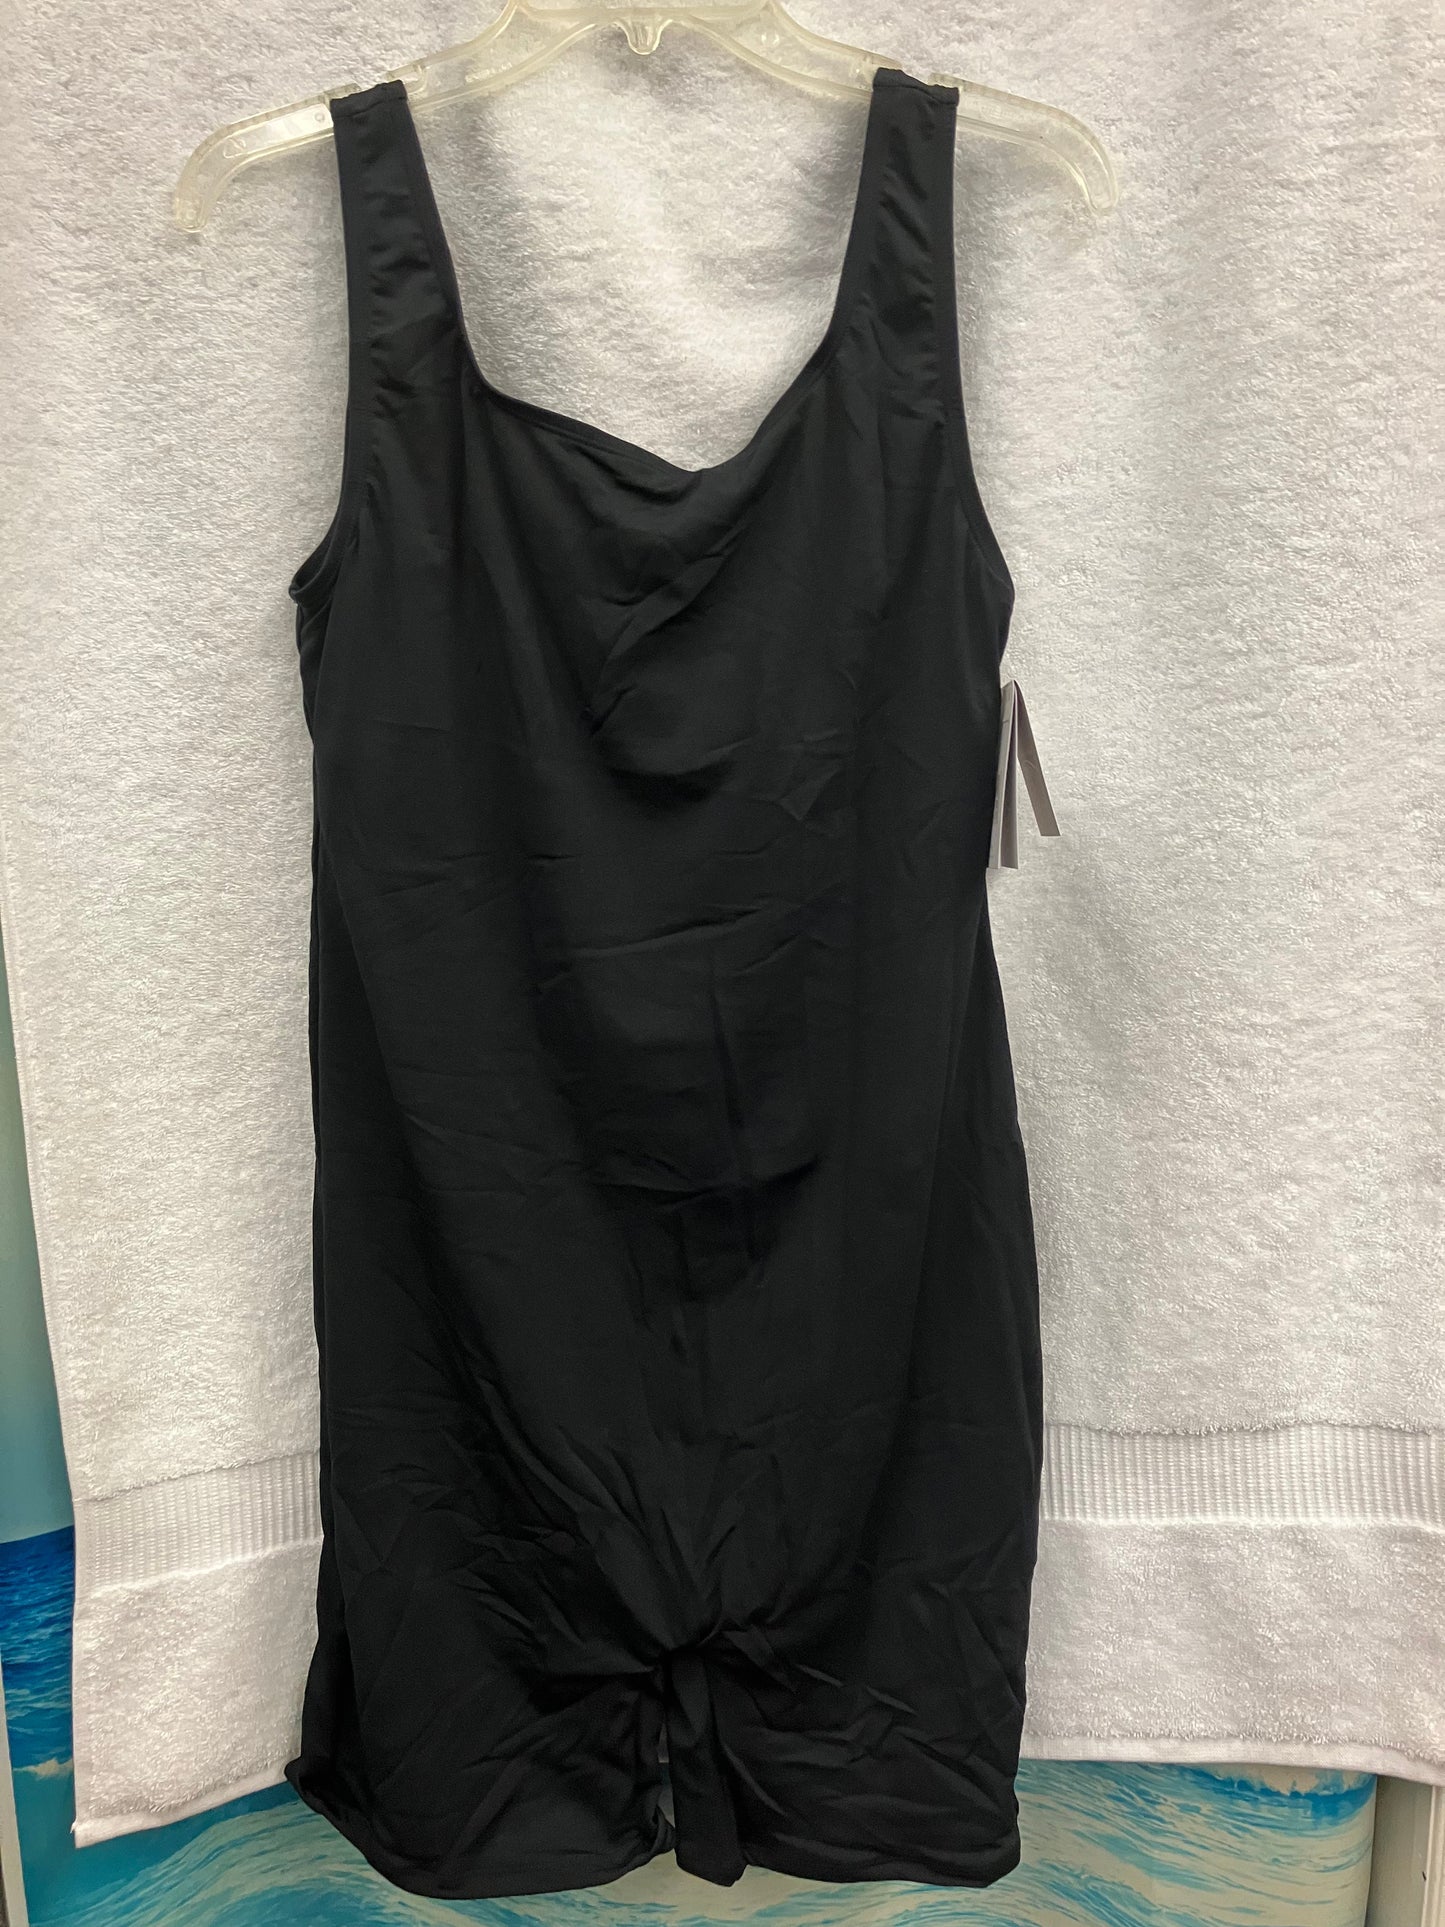 Dolfin Black Instructor Suit Size 20